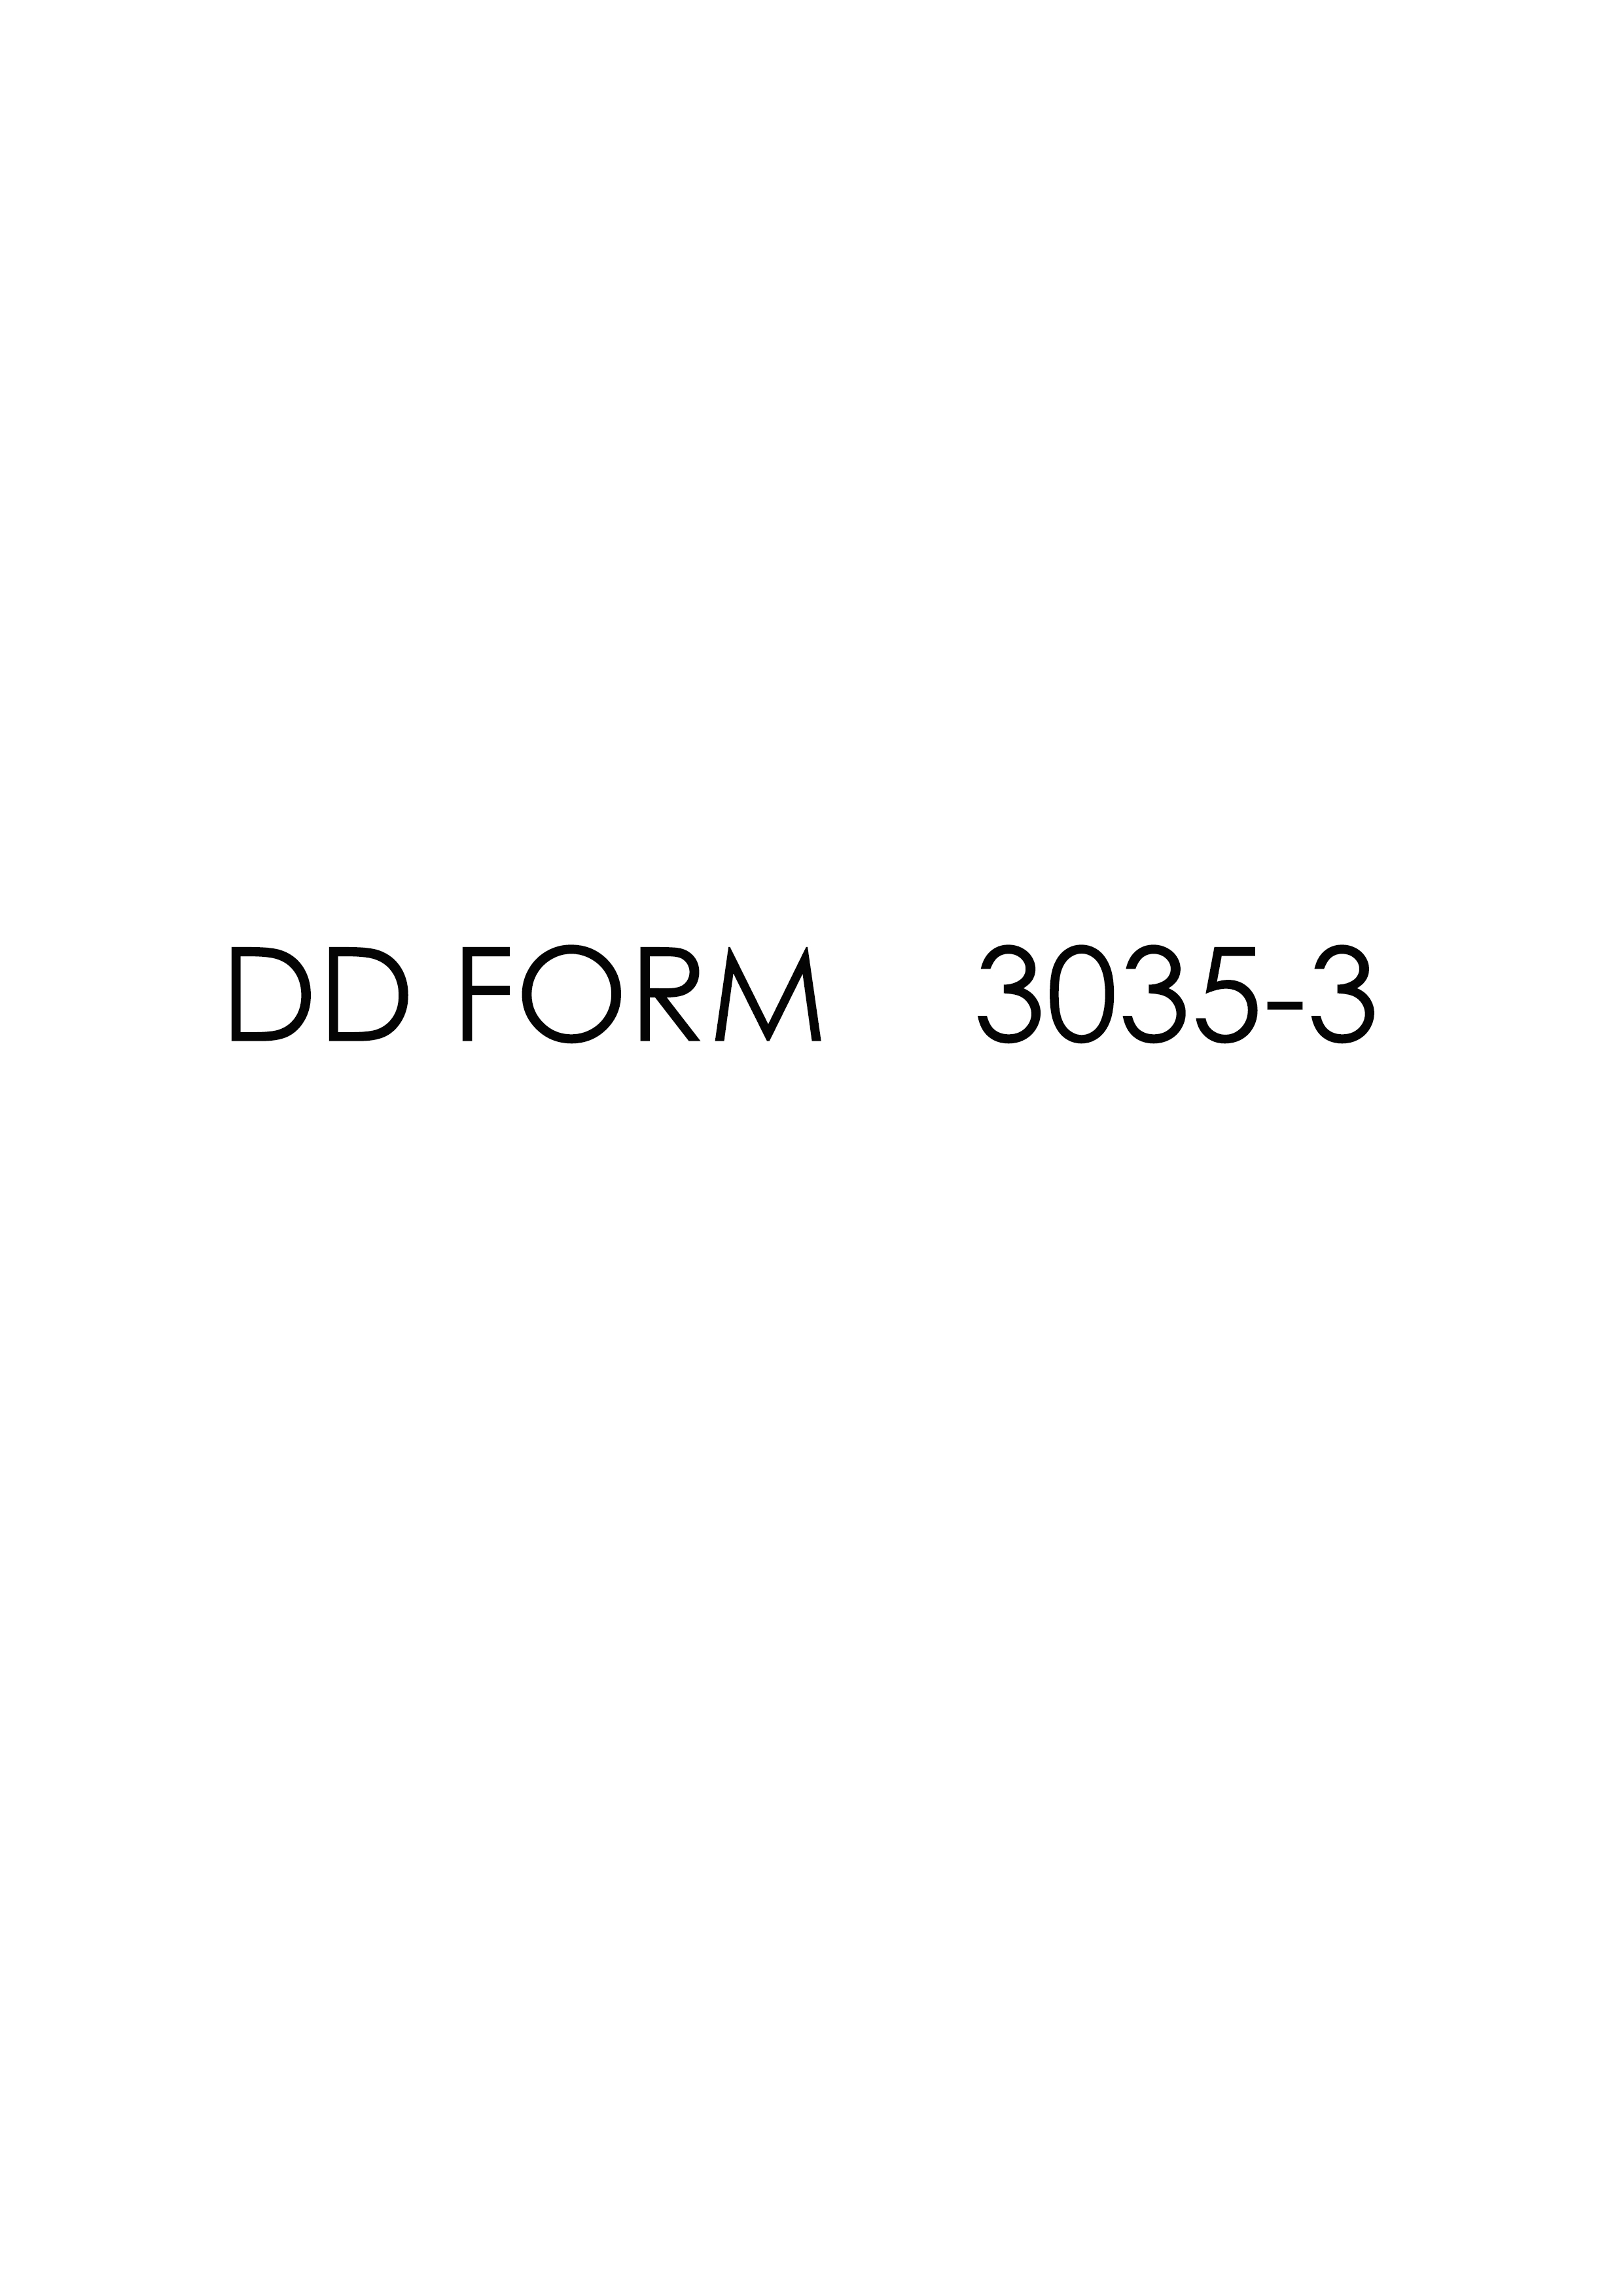 Download dd 3035-3 Form